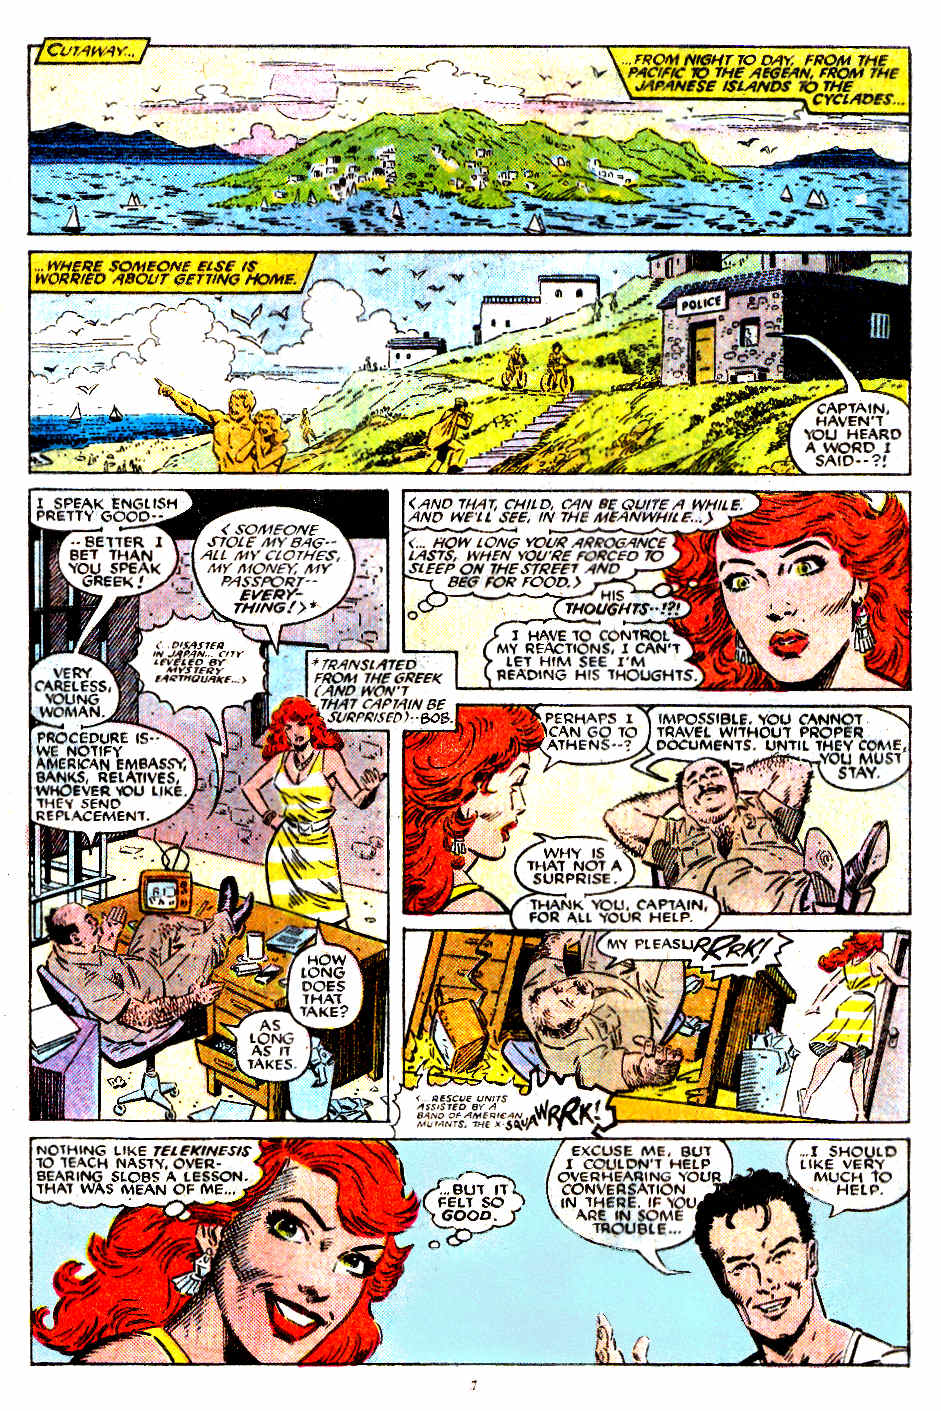 Read online Classic X-Men comic -  Issue #24 - 8